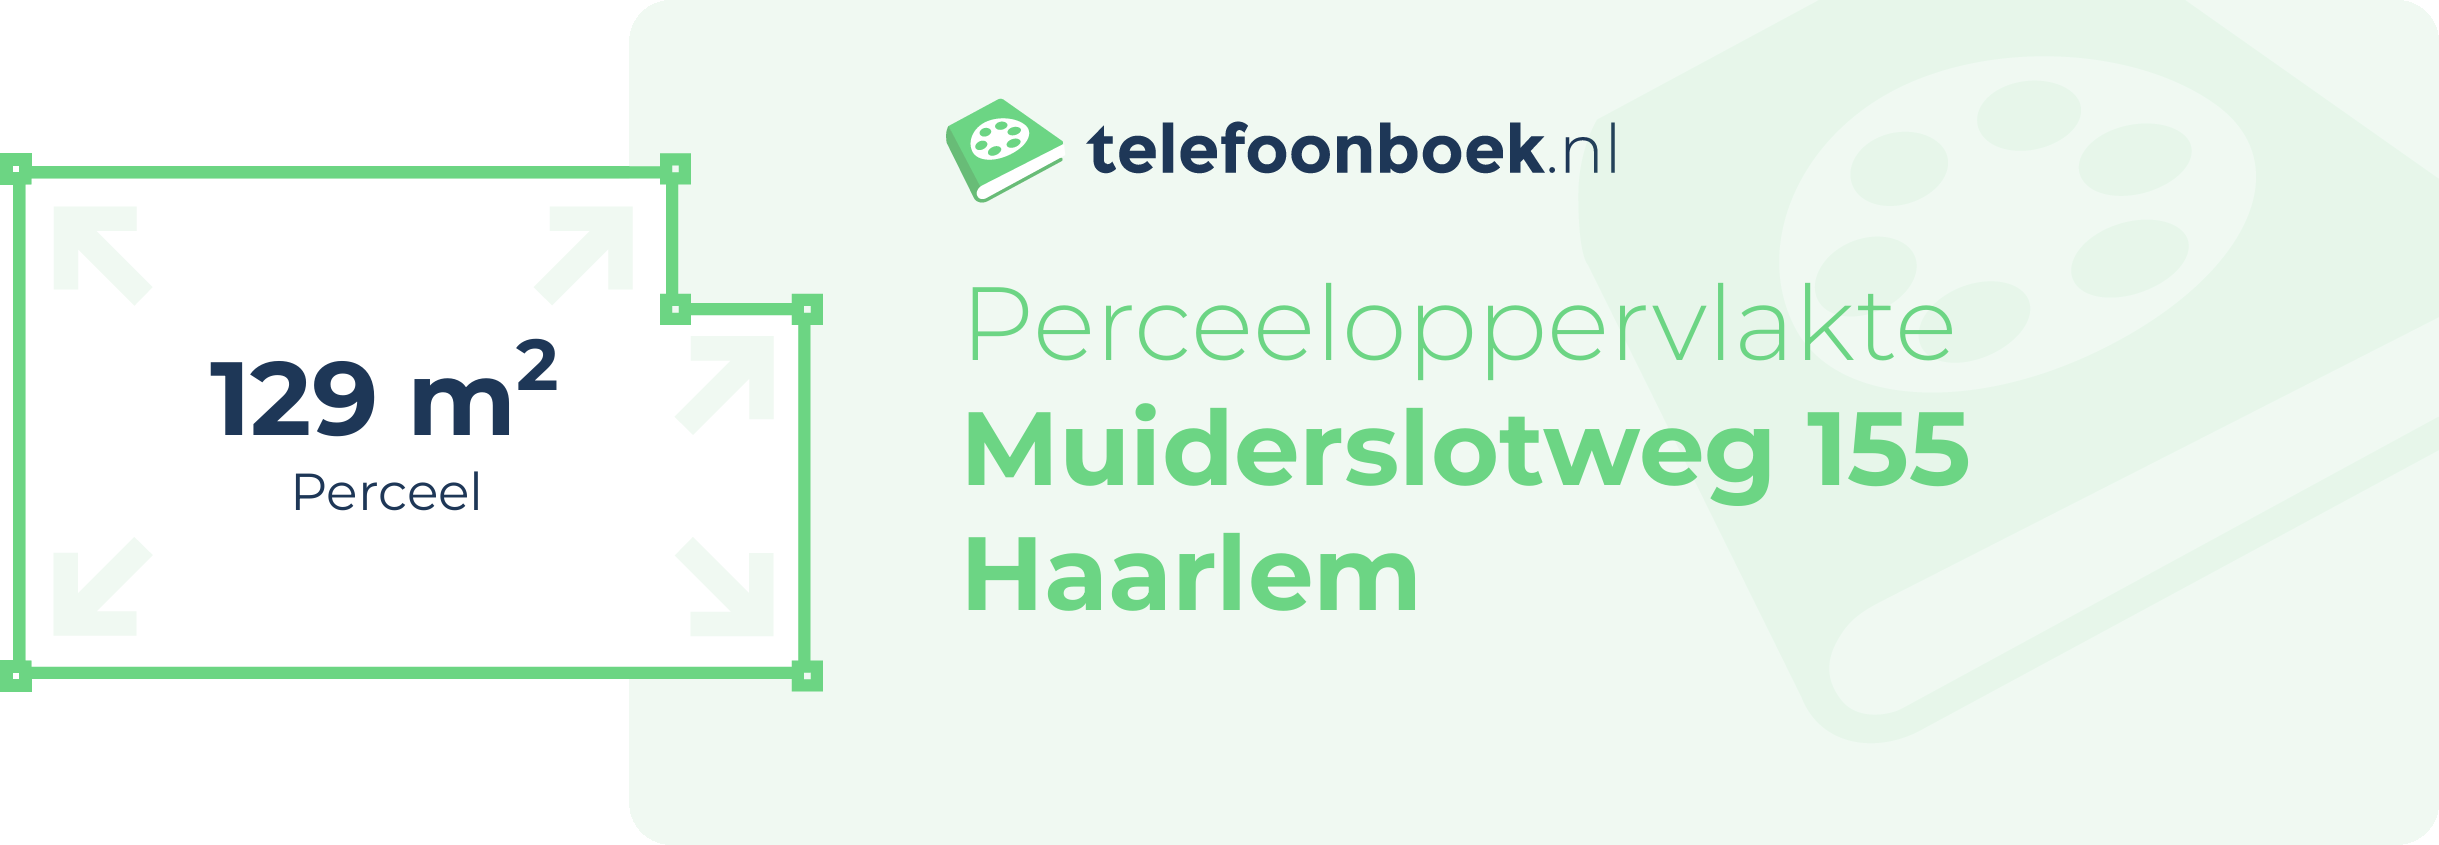 Perceeloppervlakte Muiderslotweg 155 Haarlem